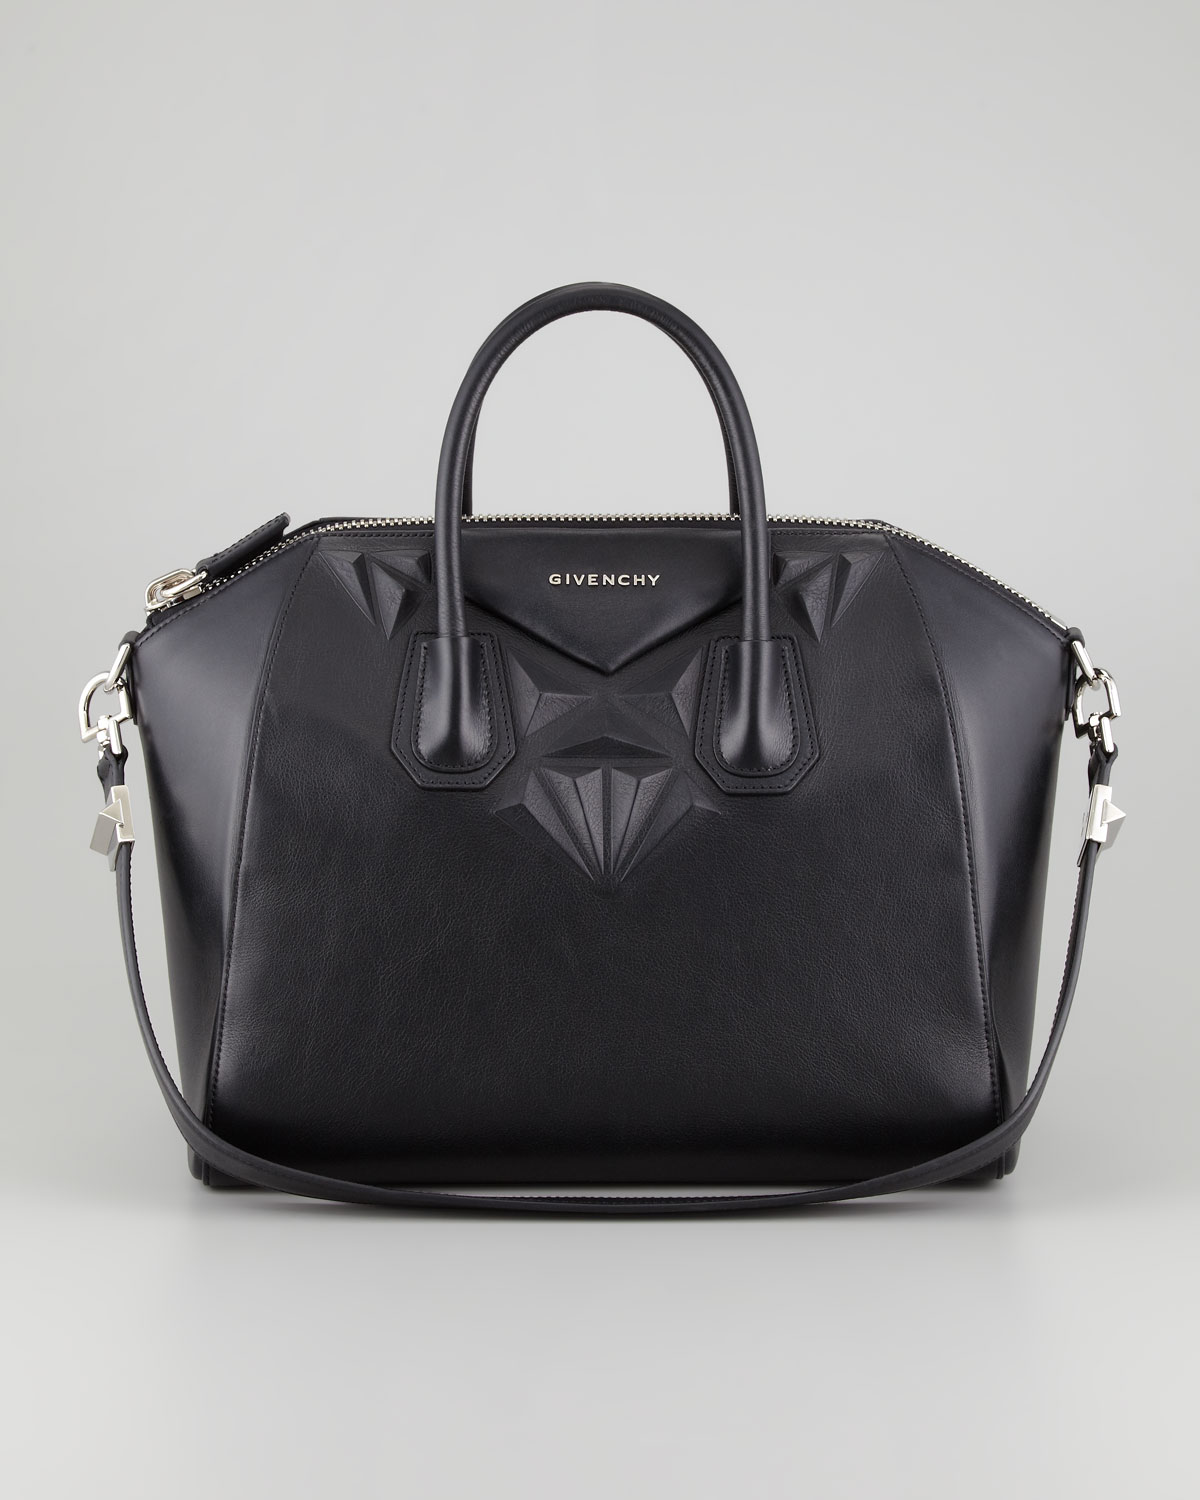 Lyst - Givenchy Antigona 3d Stud Medium Satchel Bag Black in Black